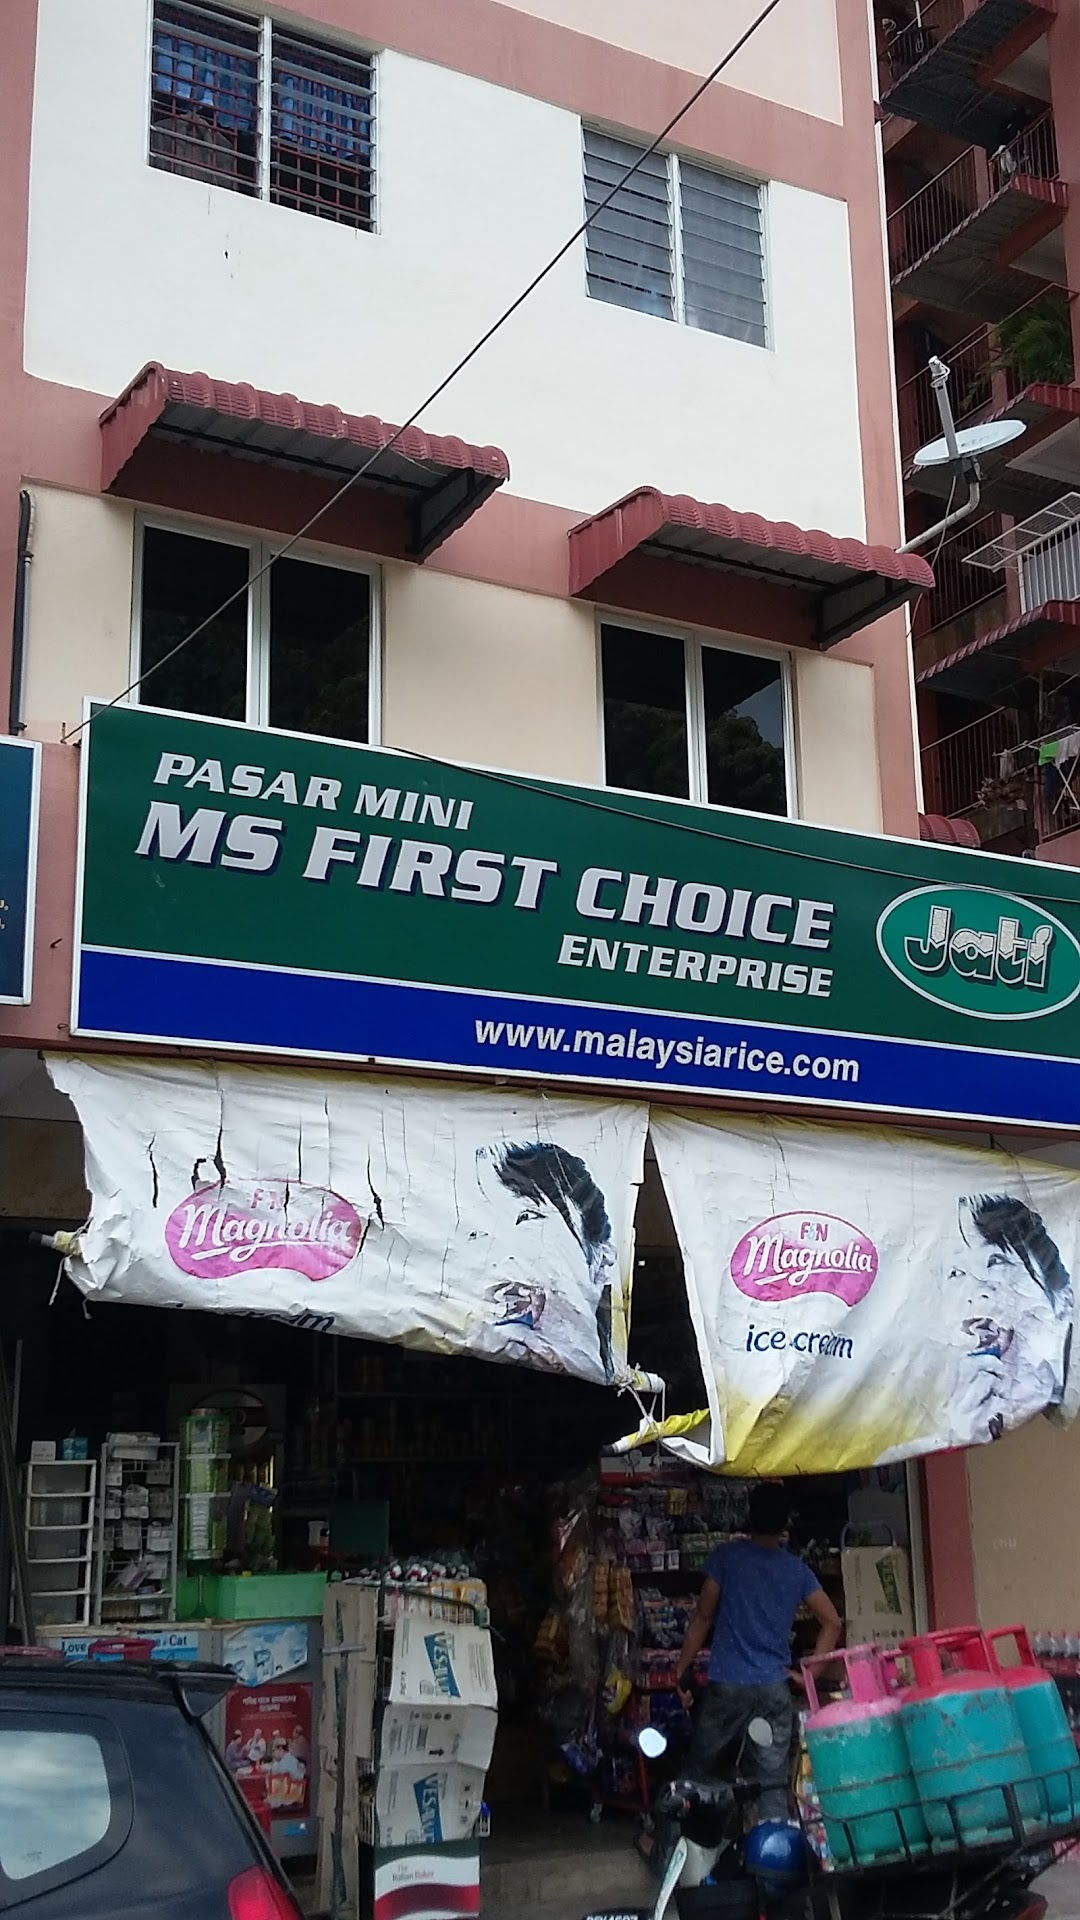 Ms First Choice Enterprise